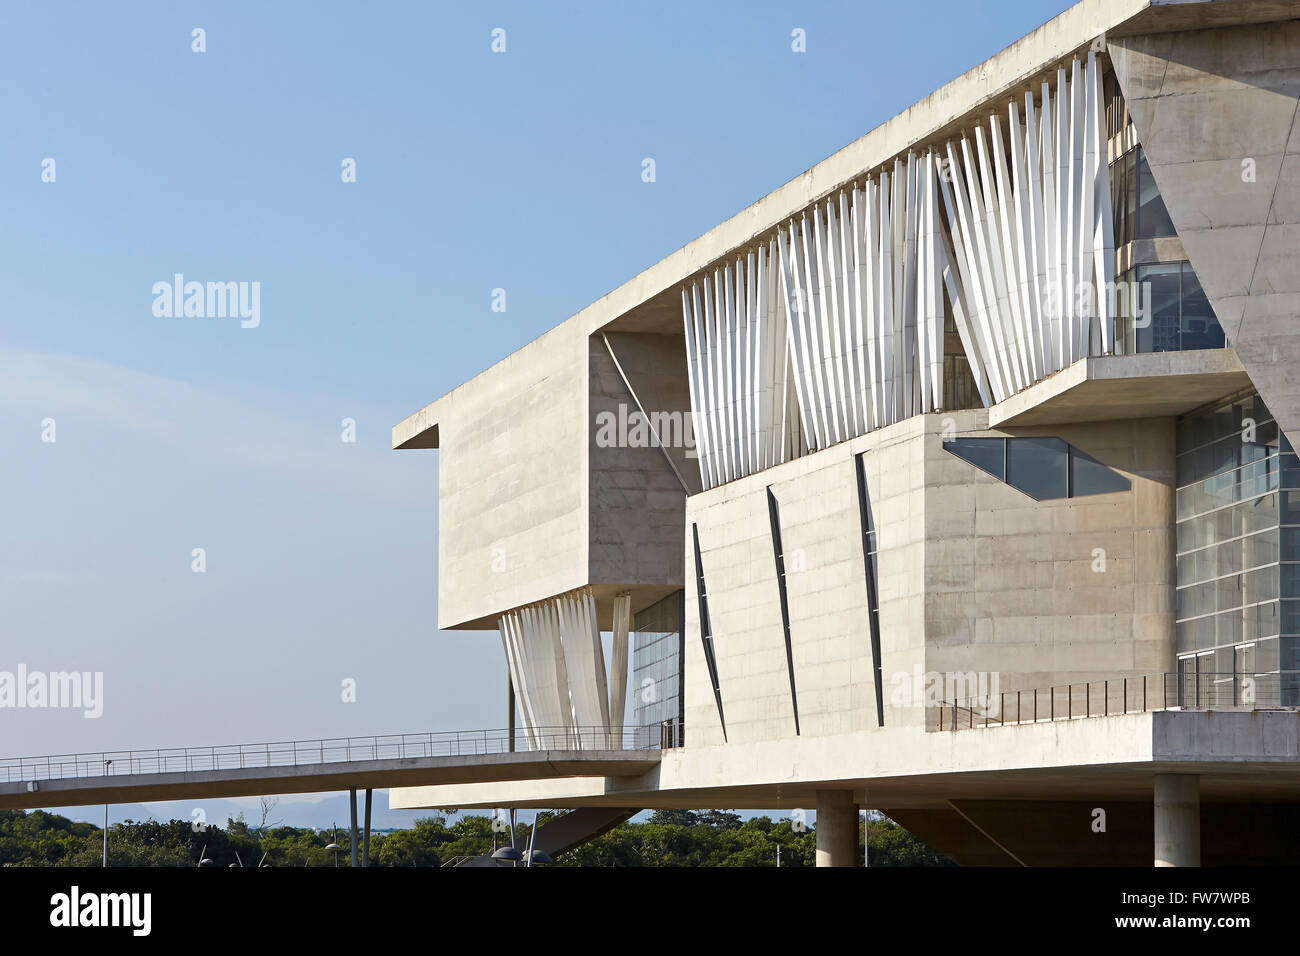 Fußgängerbrücke Link zum Gebäude. La Cidade Das Artes, Barra da Tijuca, Brasilien. Architekt: Christian de Portzamparc, 2014 Stockfoto